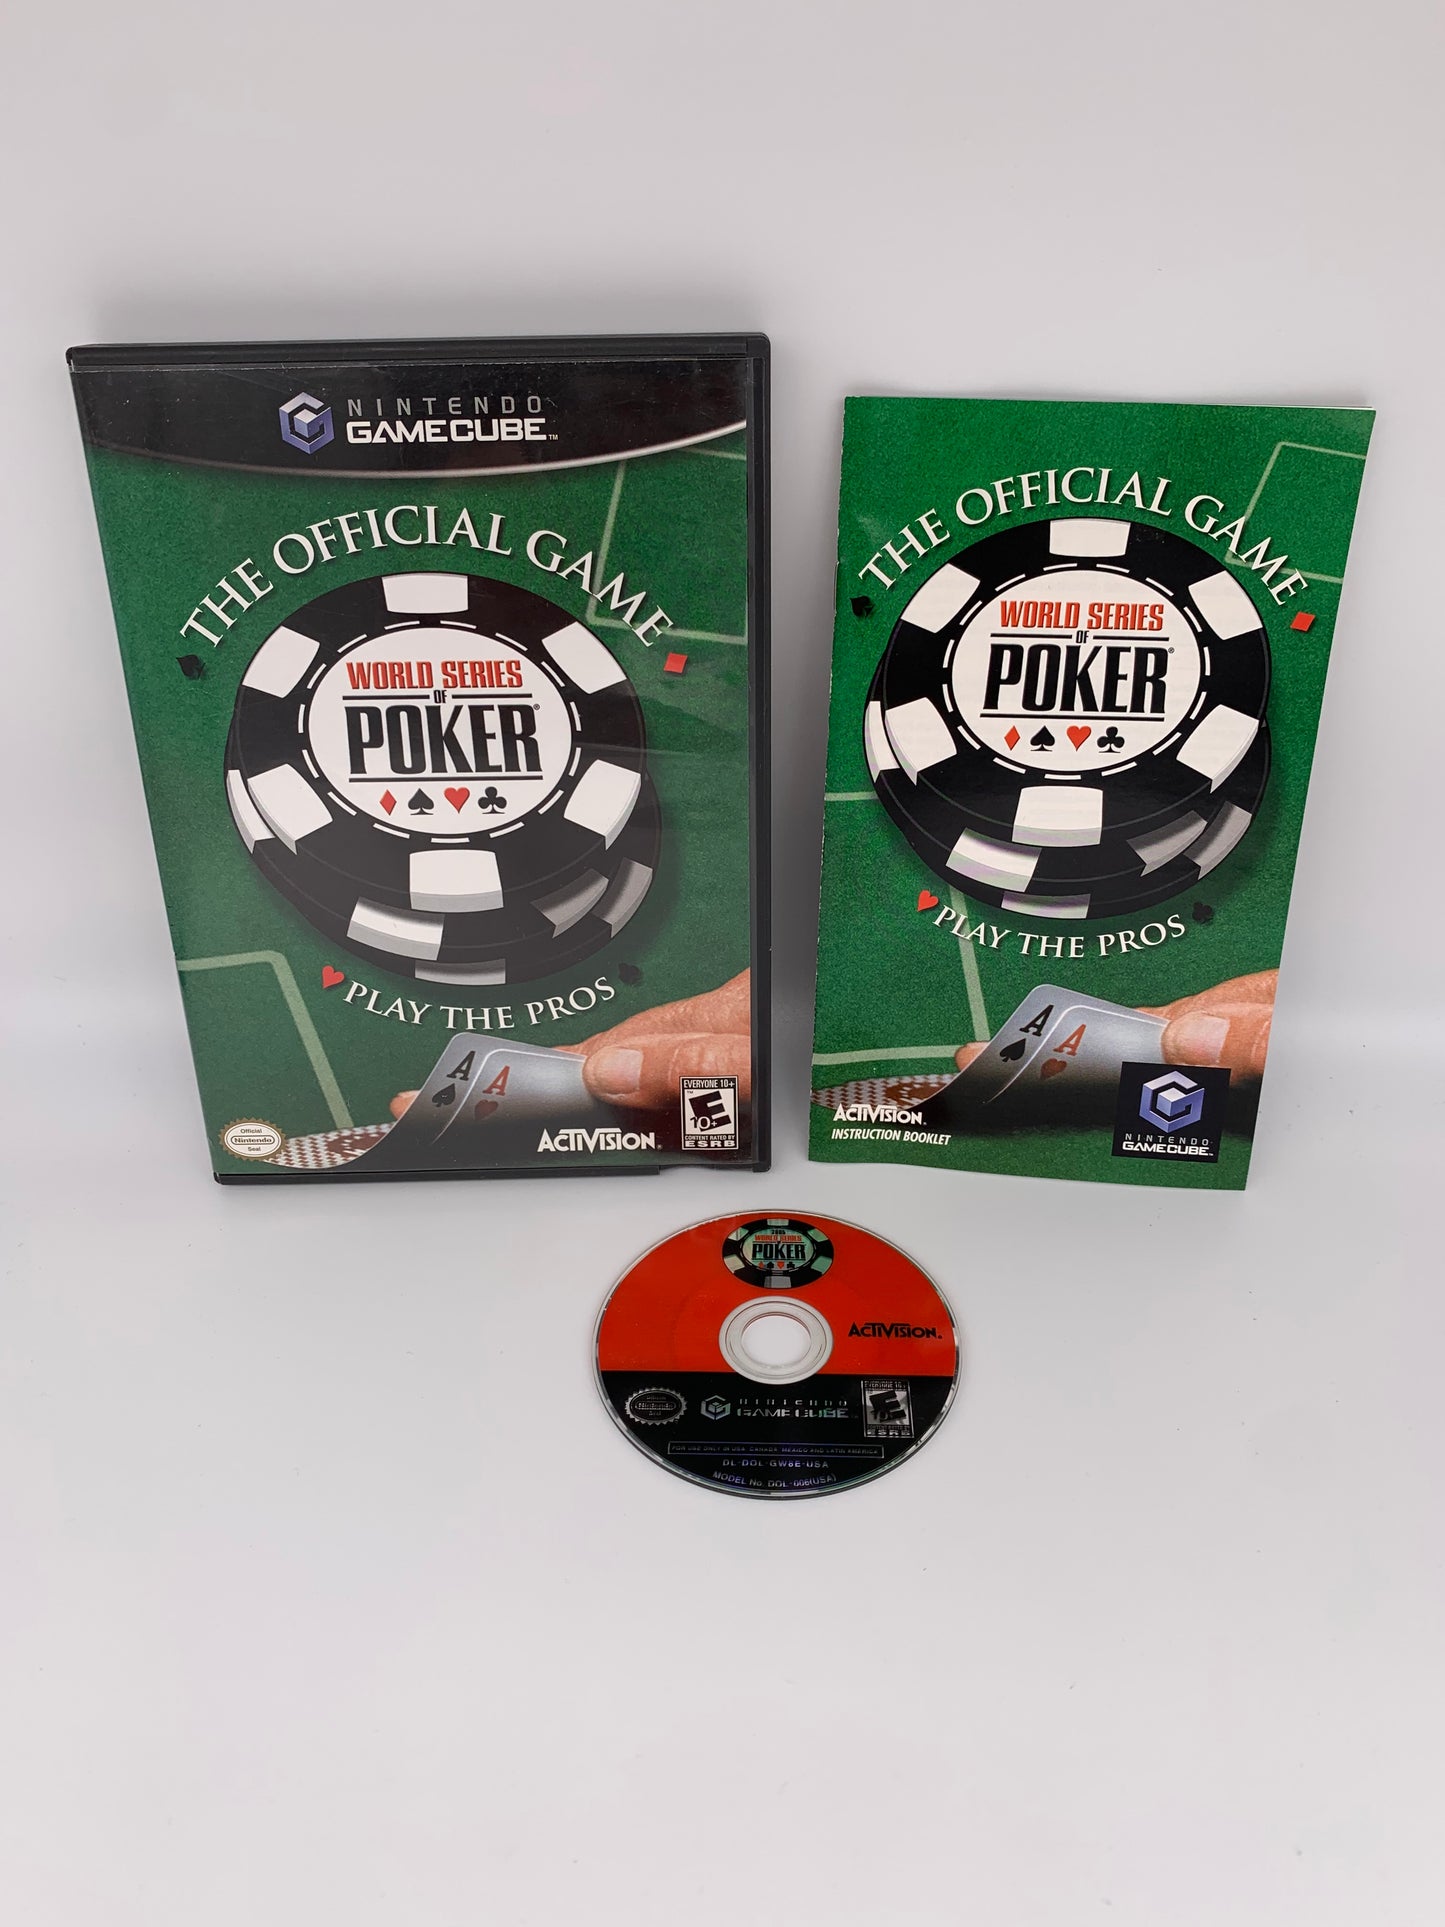 PiXEL-RETRO.COM : NINTENDO GAMECUBE COMPLETE CIB BOX MANUAL GAME NTSC THE OFFICIAL GAME WORLD SERIES POKER PLAY THE PROS